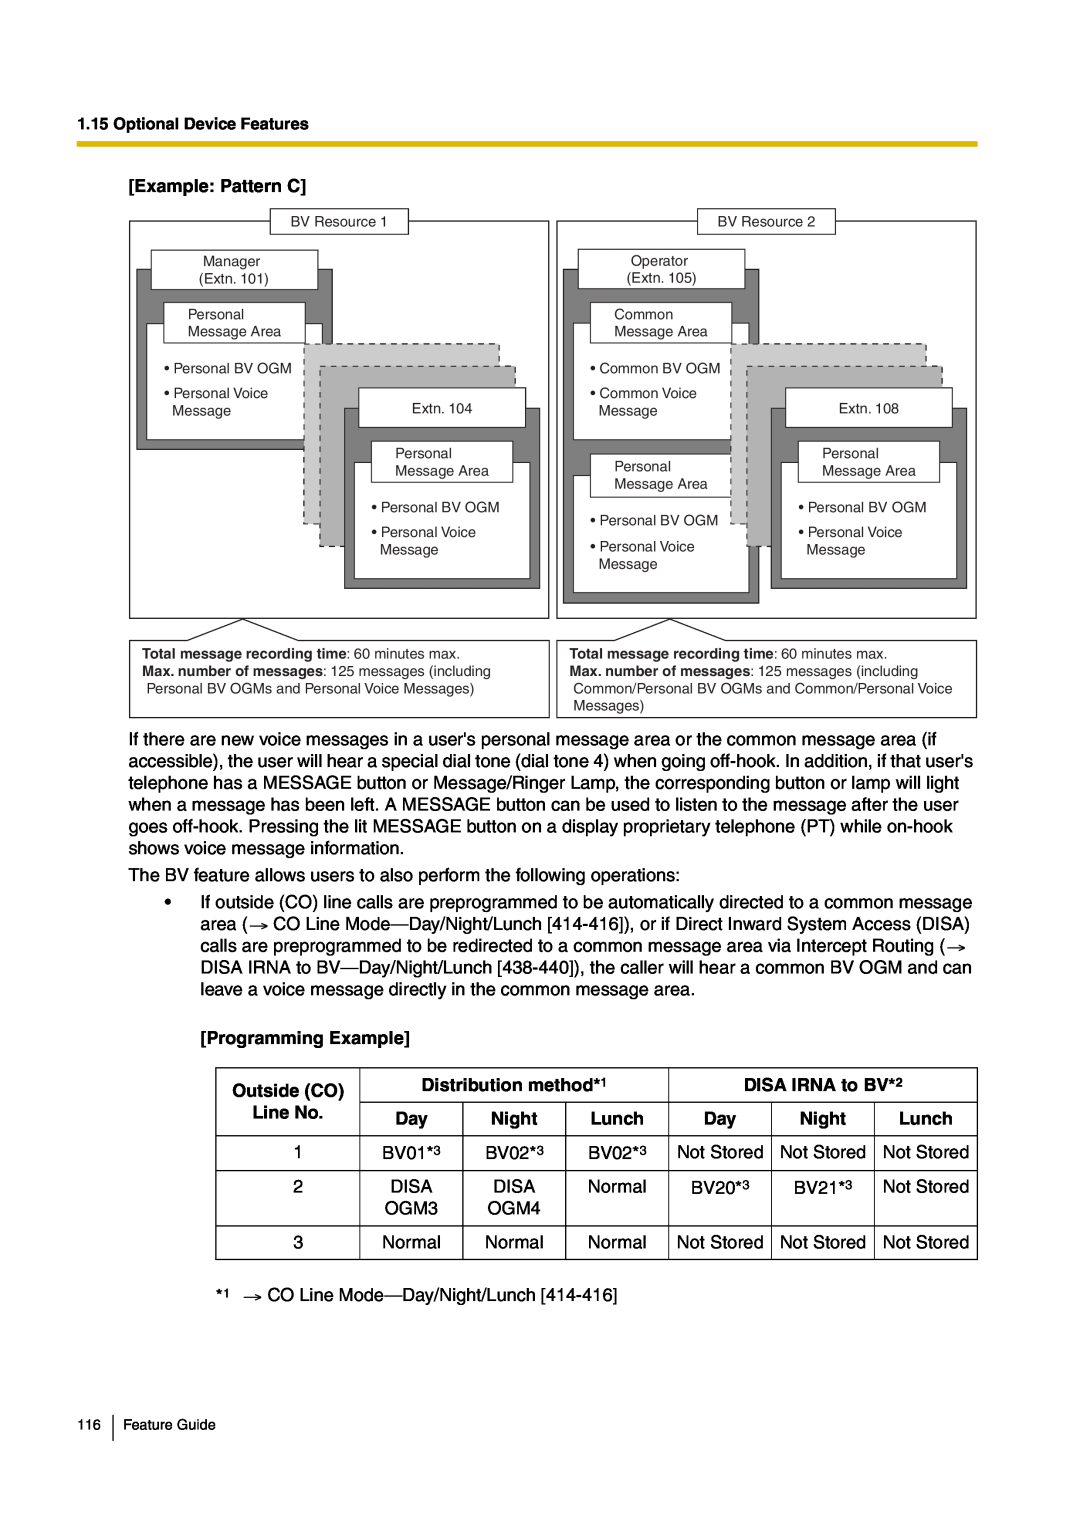 Panasonic kx-tea308 Example: Pattern C, Programming Example, Outside CO, Distribution method*1, DISA IRNA to BV*2, Line No 